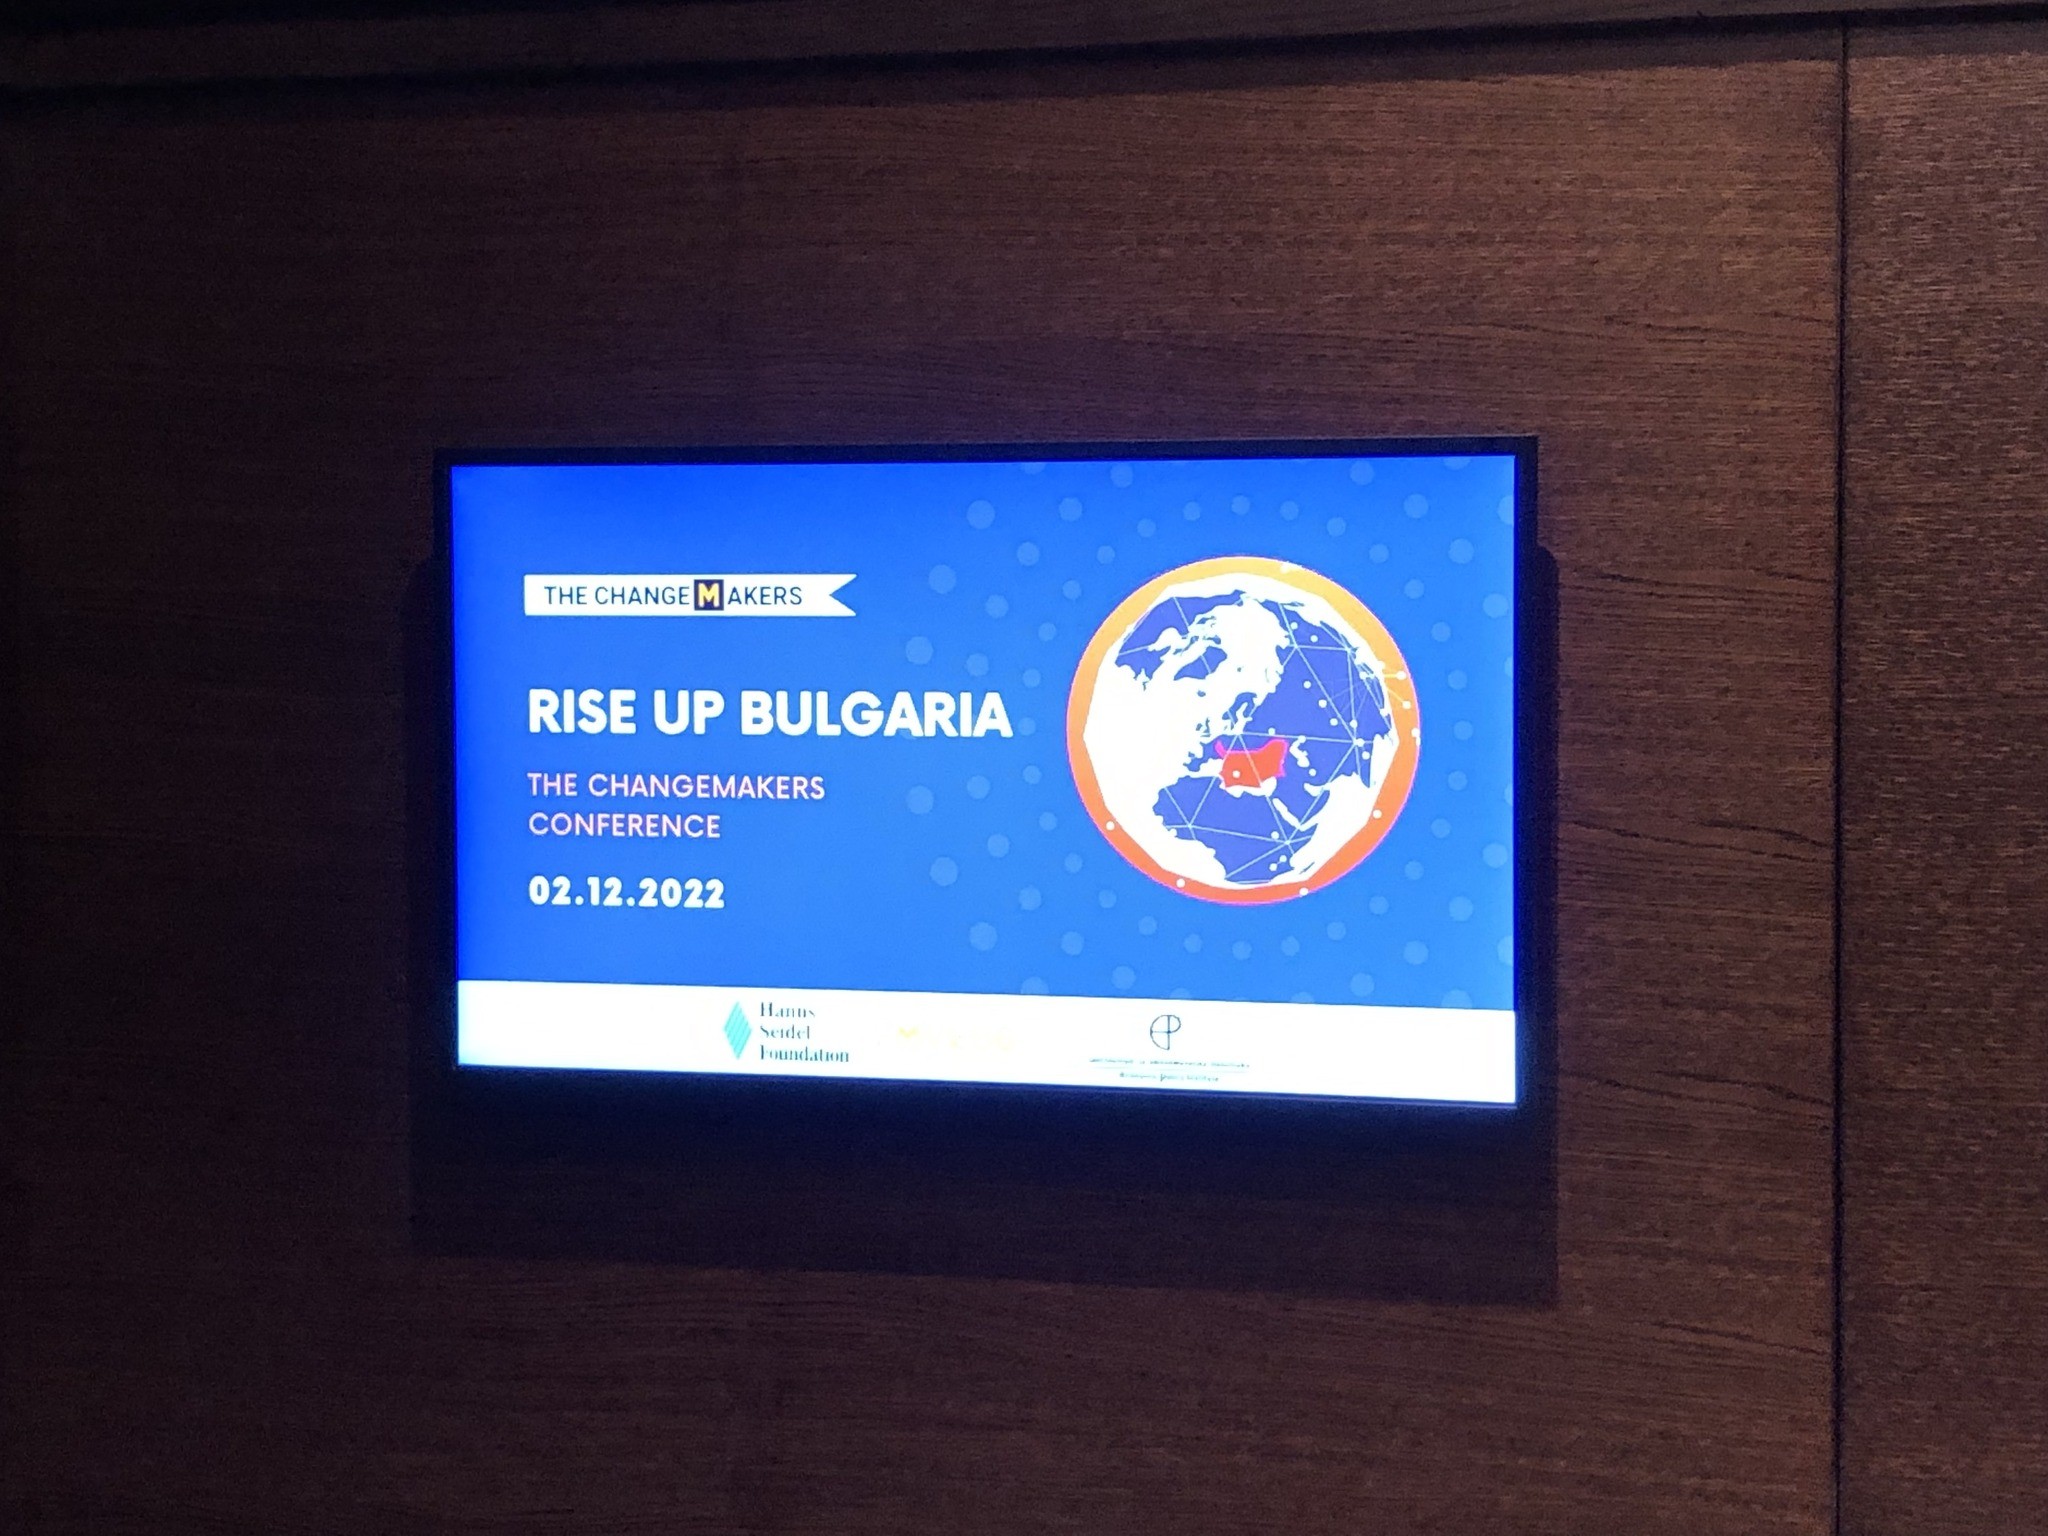 Ruse up Bulgaria